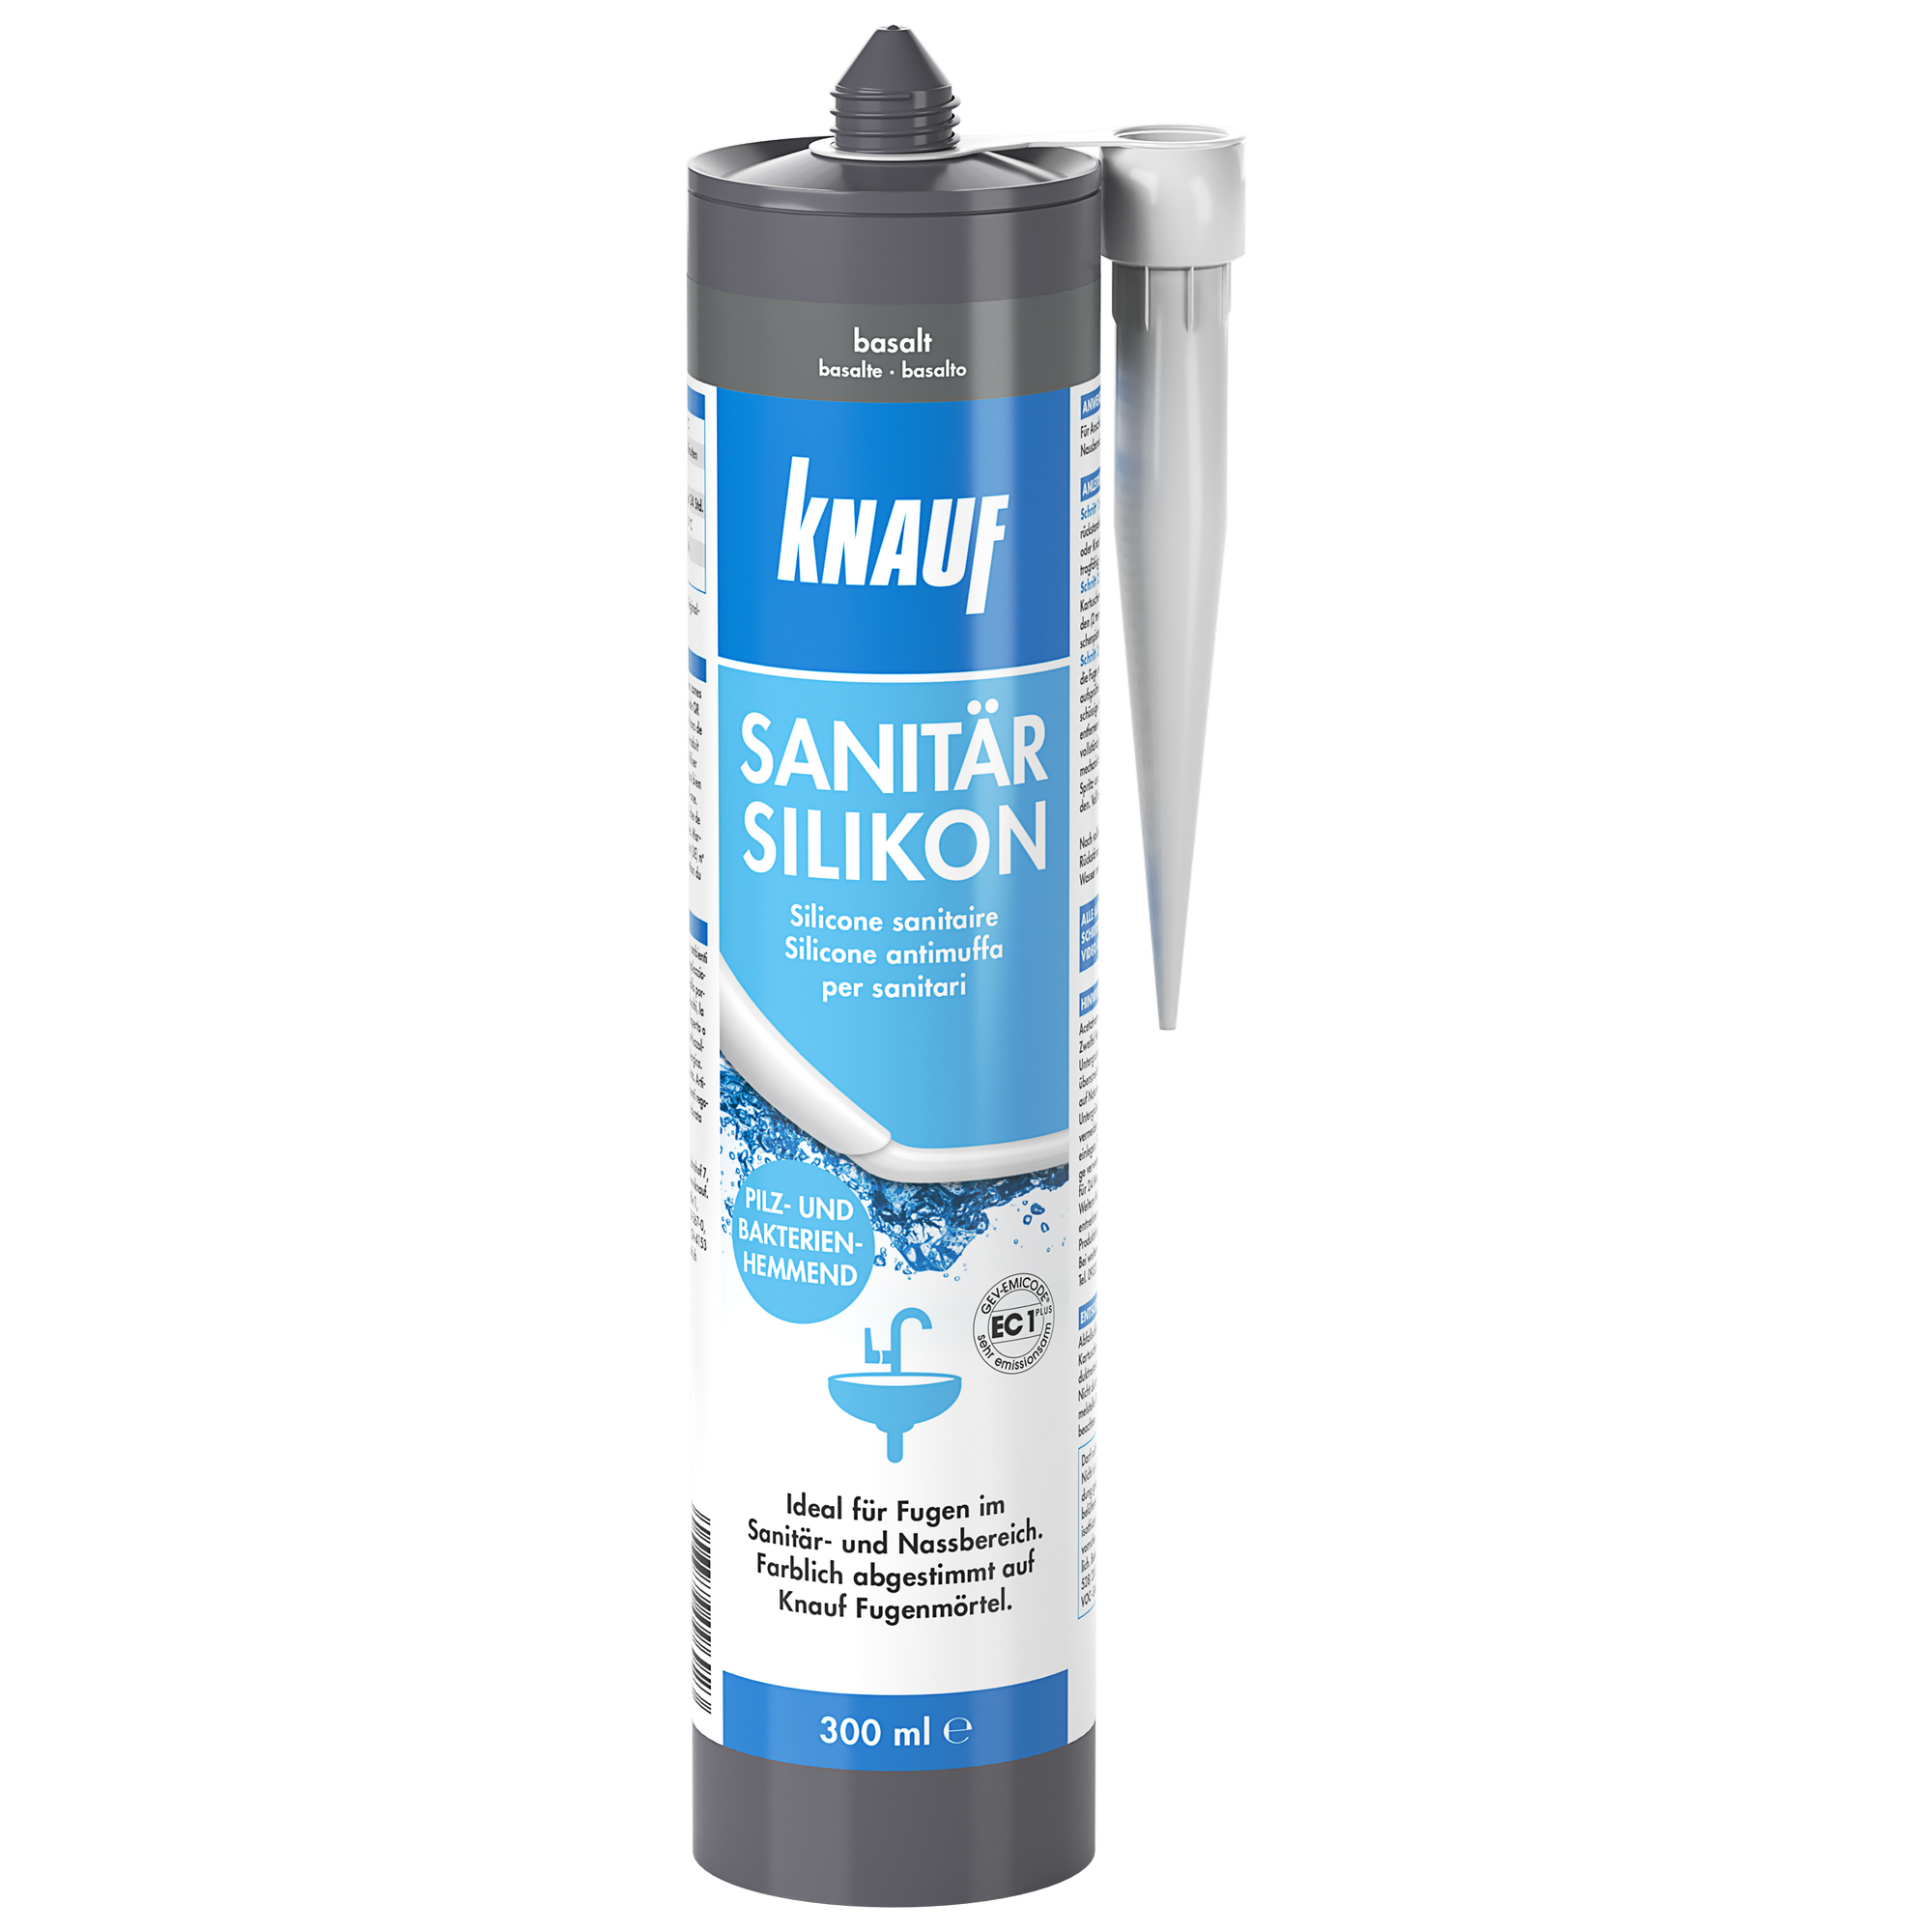 Sanitärsilikon basalt 300 ml + product picture